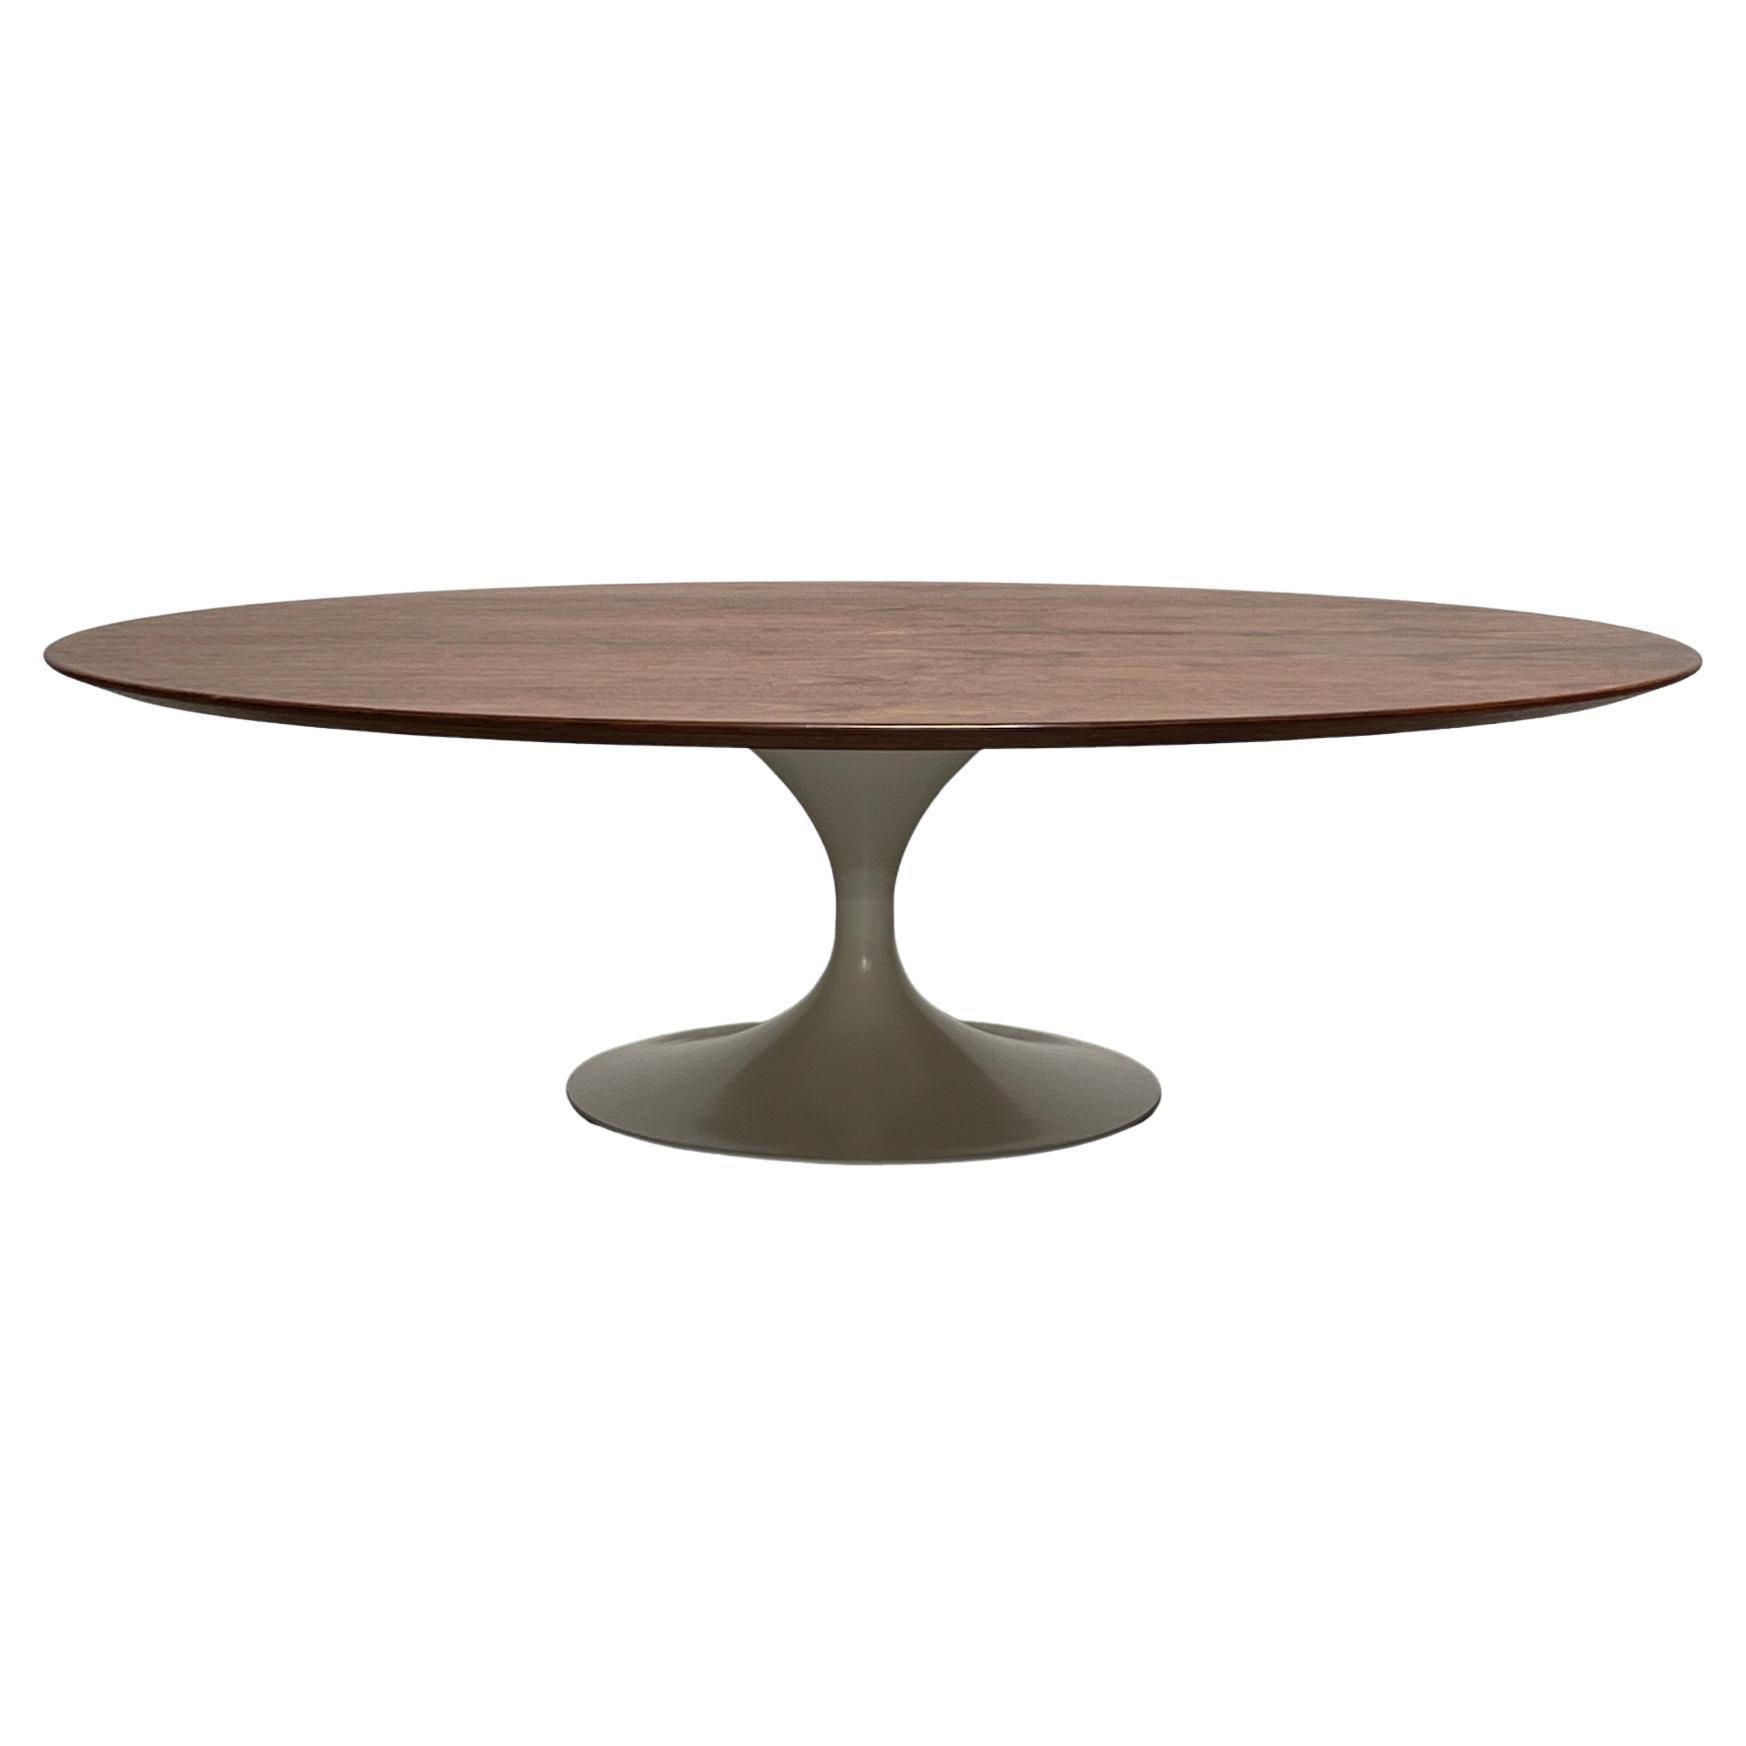 Walnut Top Elliptical Coffee Table by Eero Saarinen for Knoll For Sale